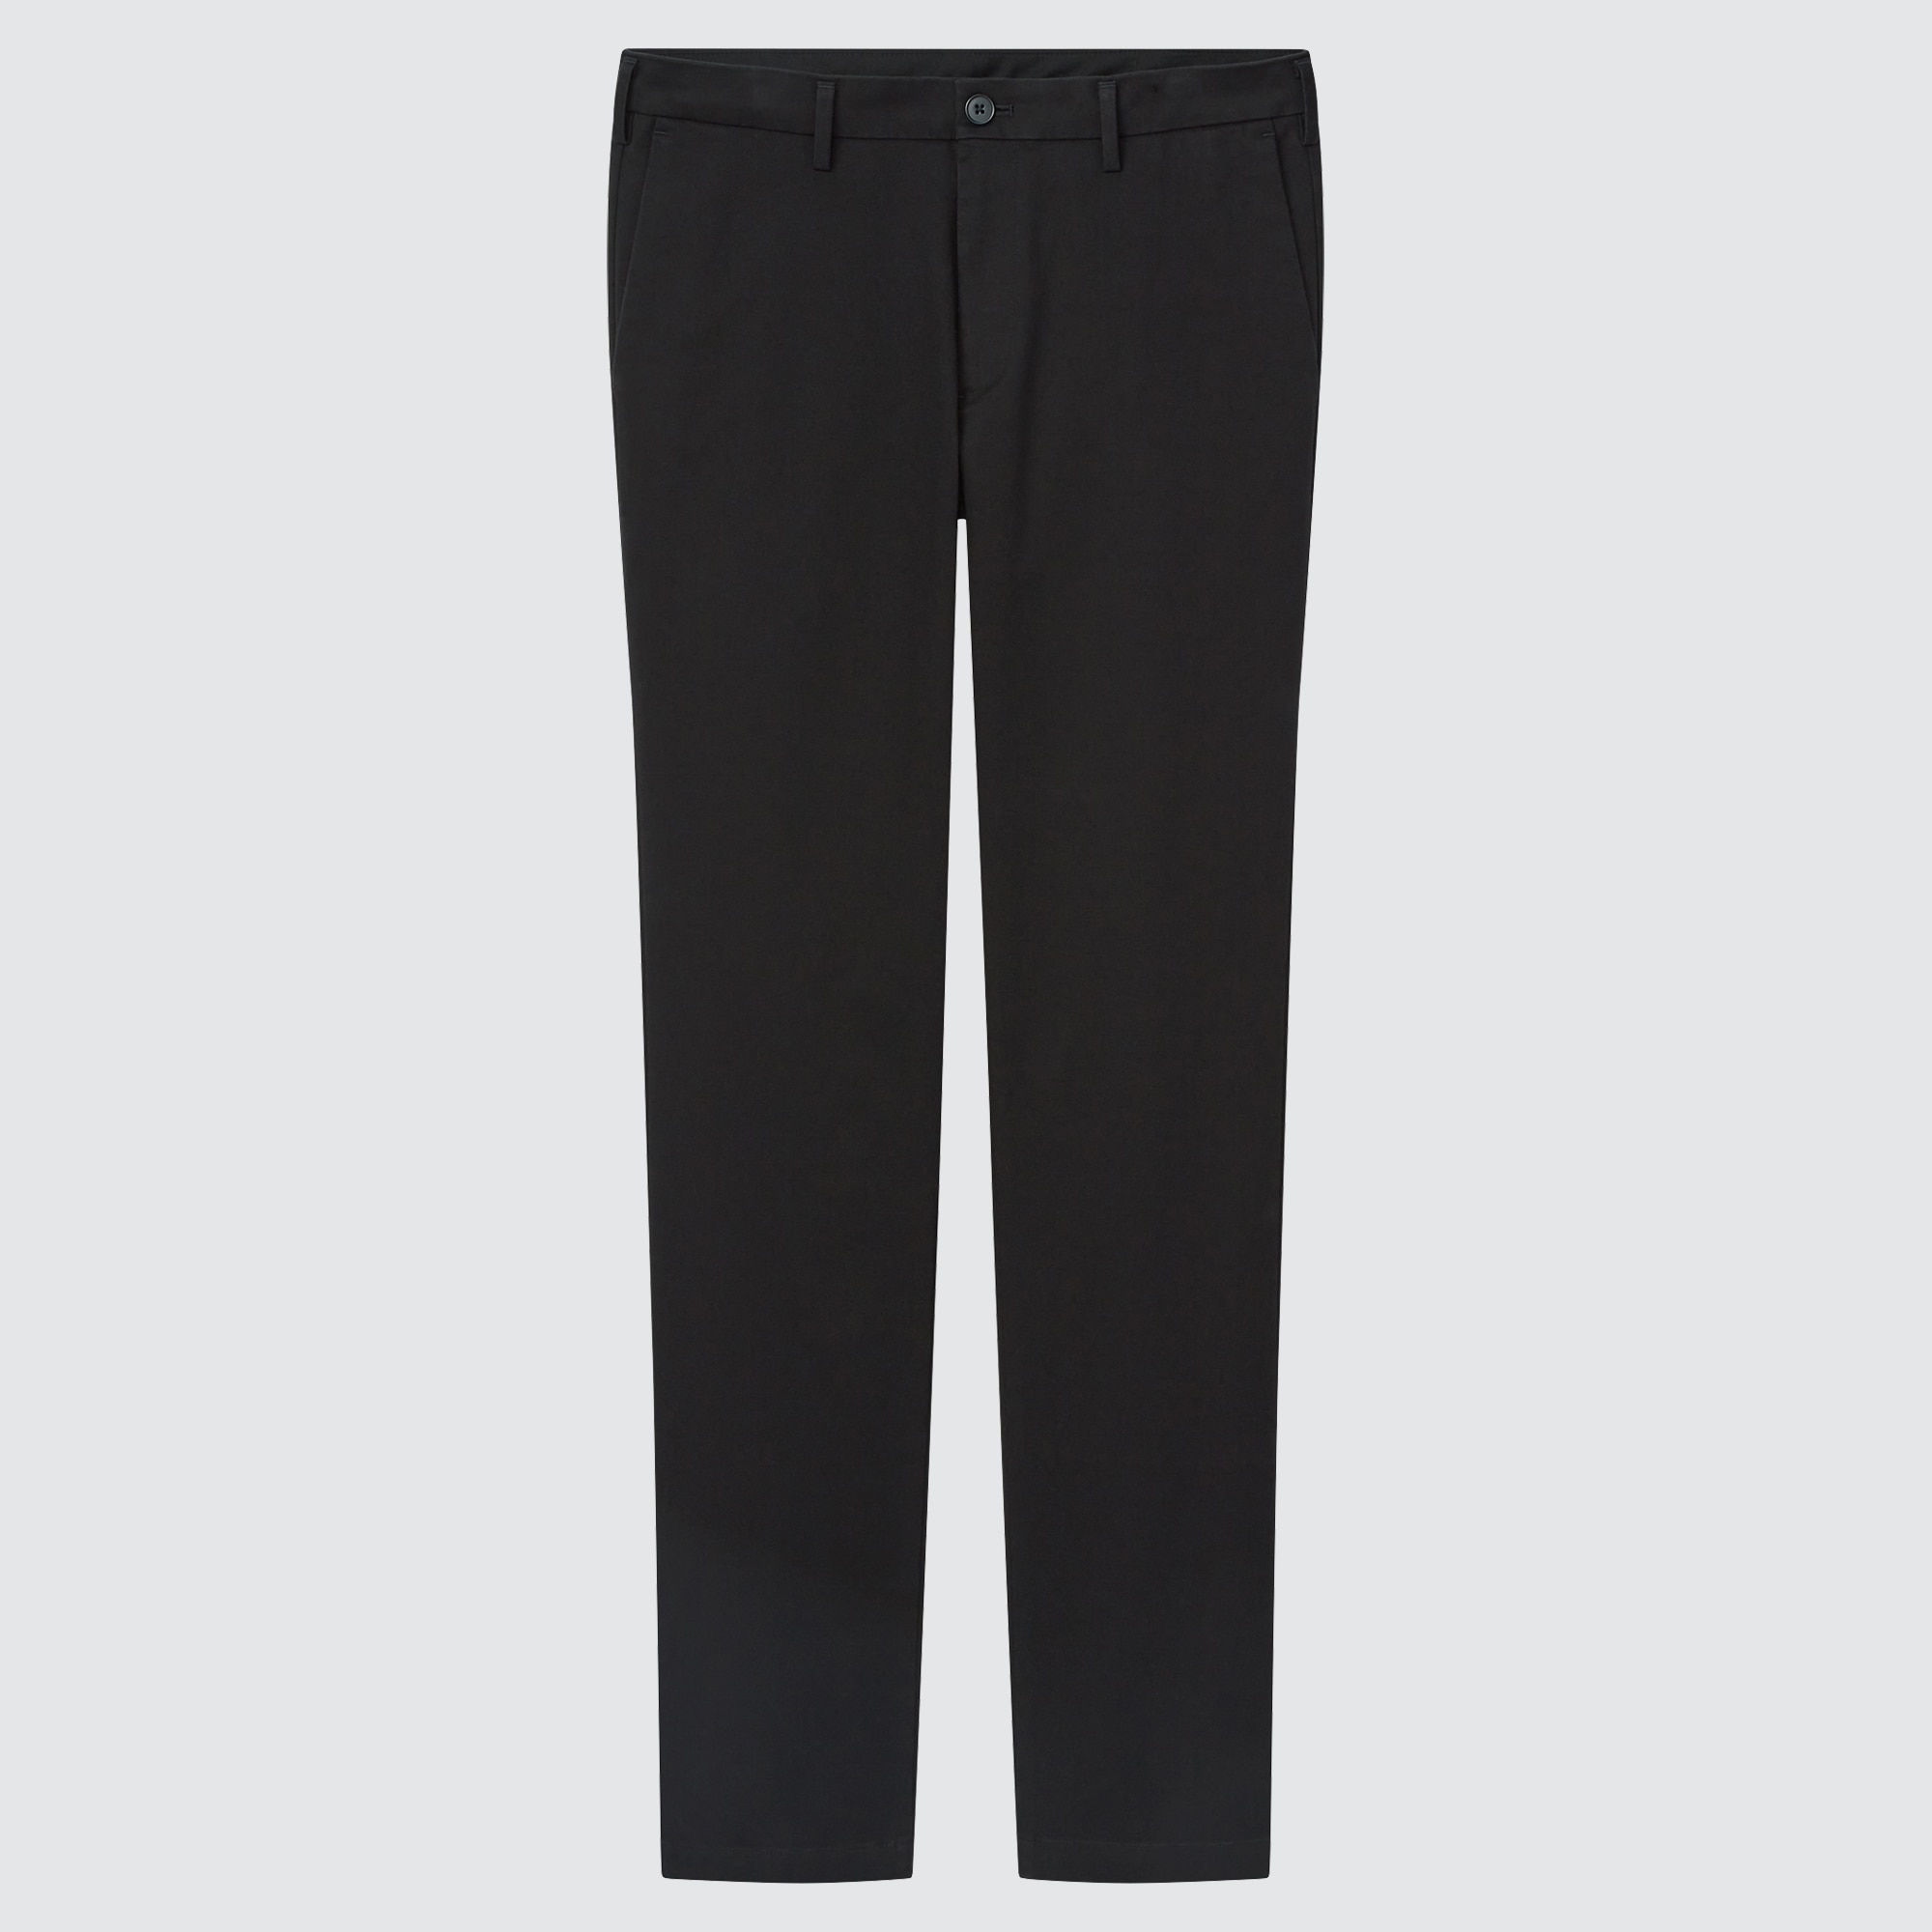 UNIQLO AirSense Pants (Ultra Light Pants) (Cotton Like)